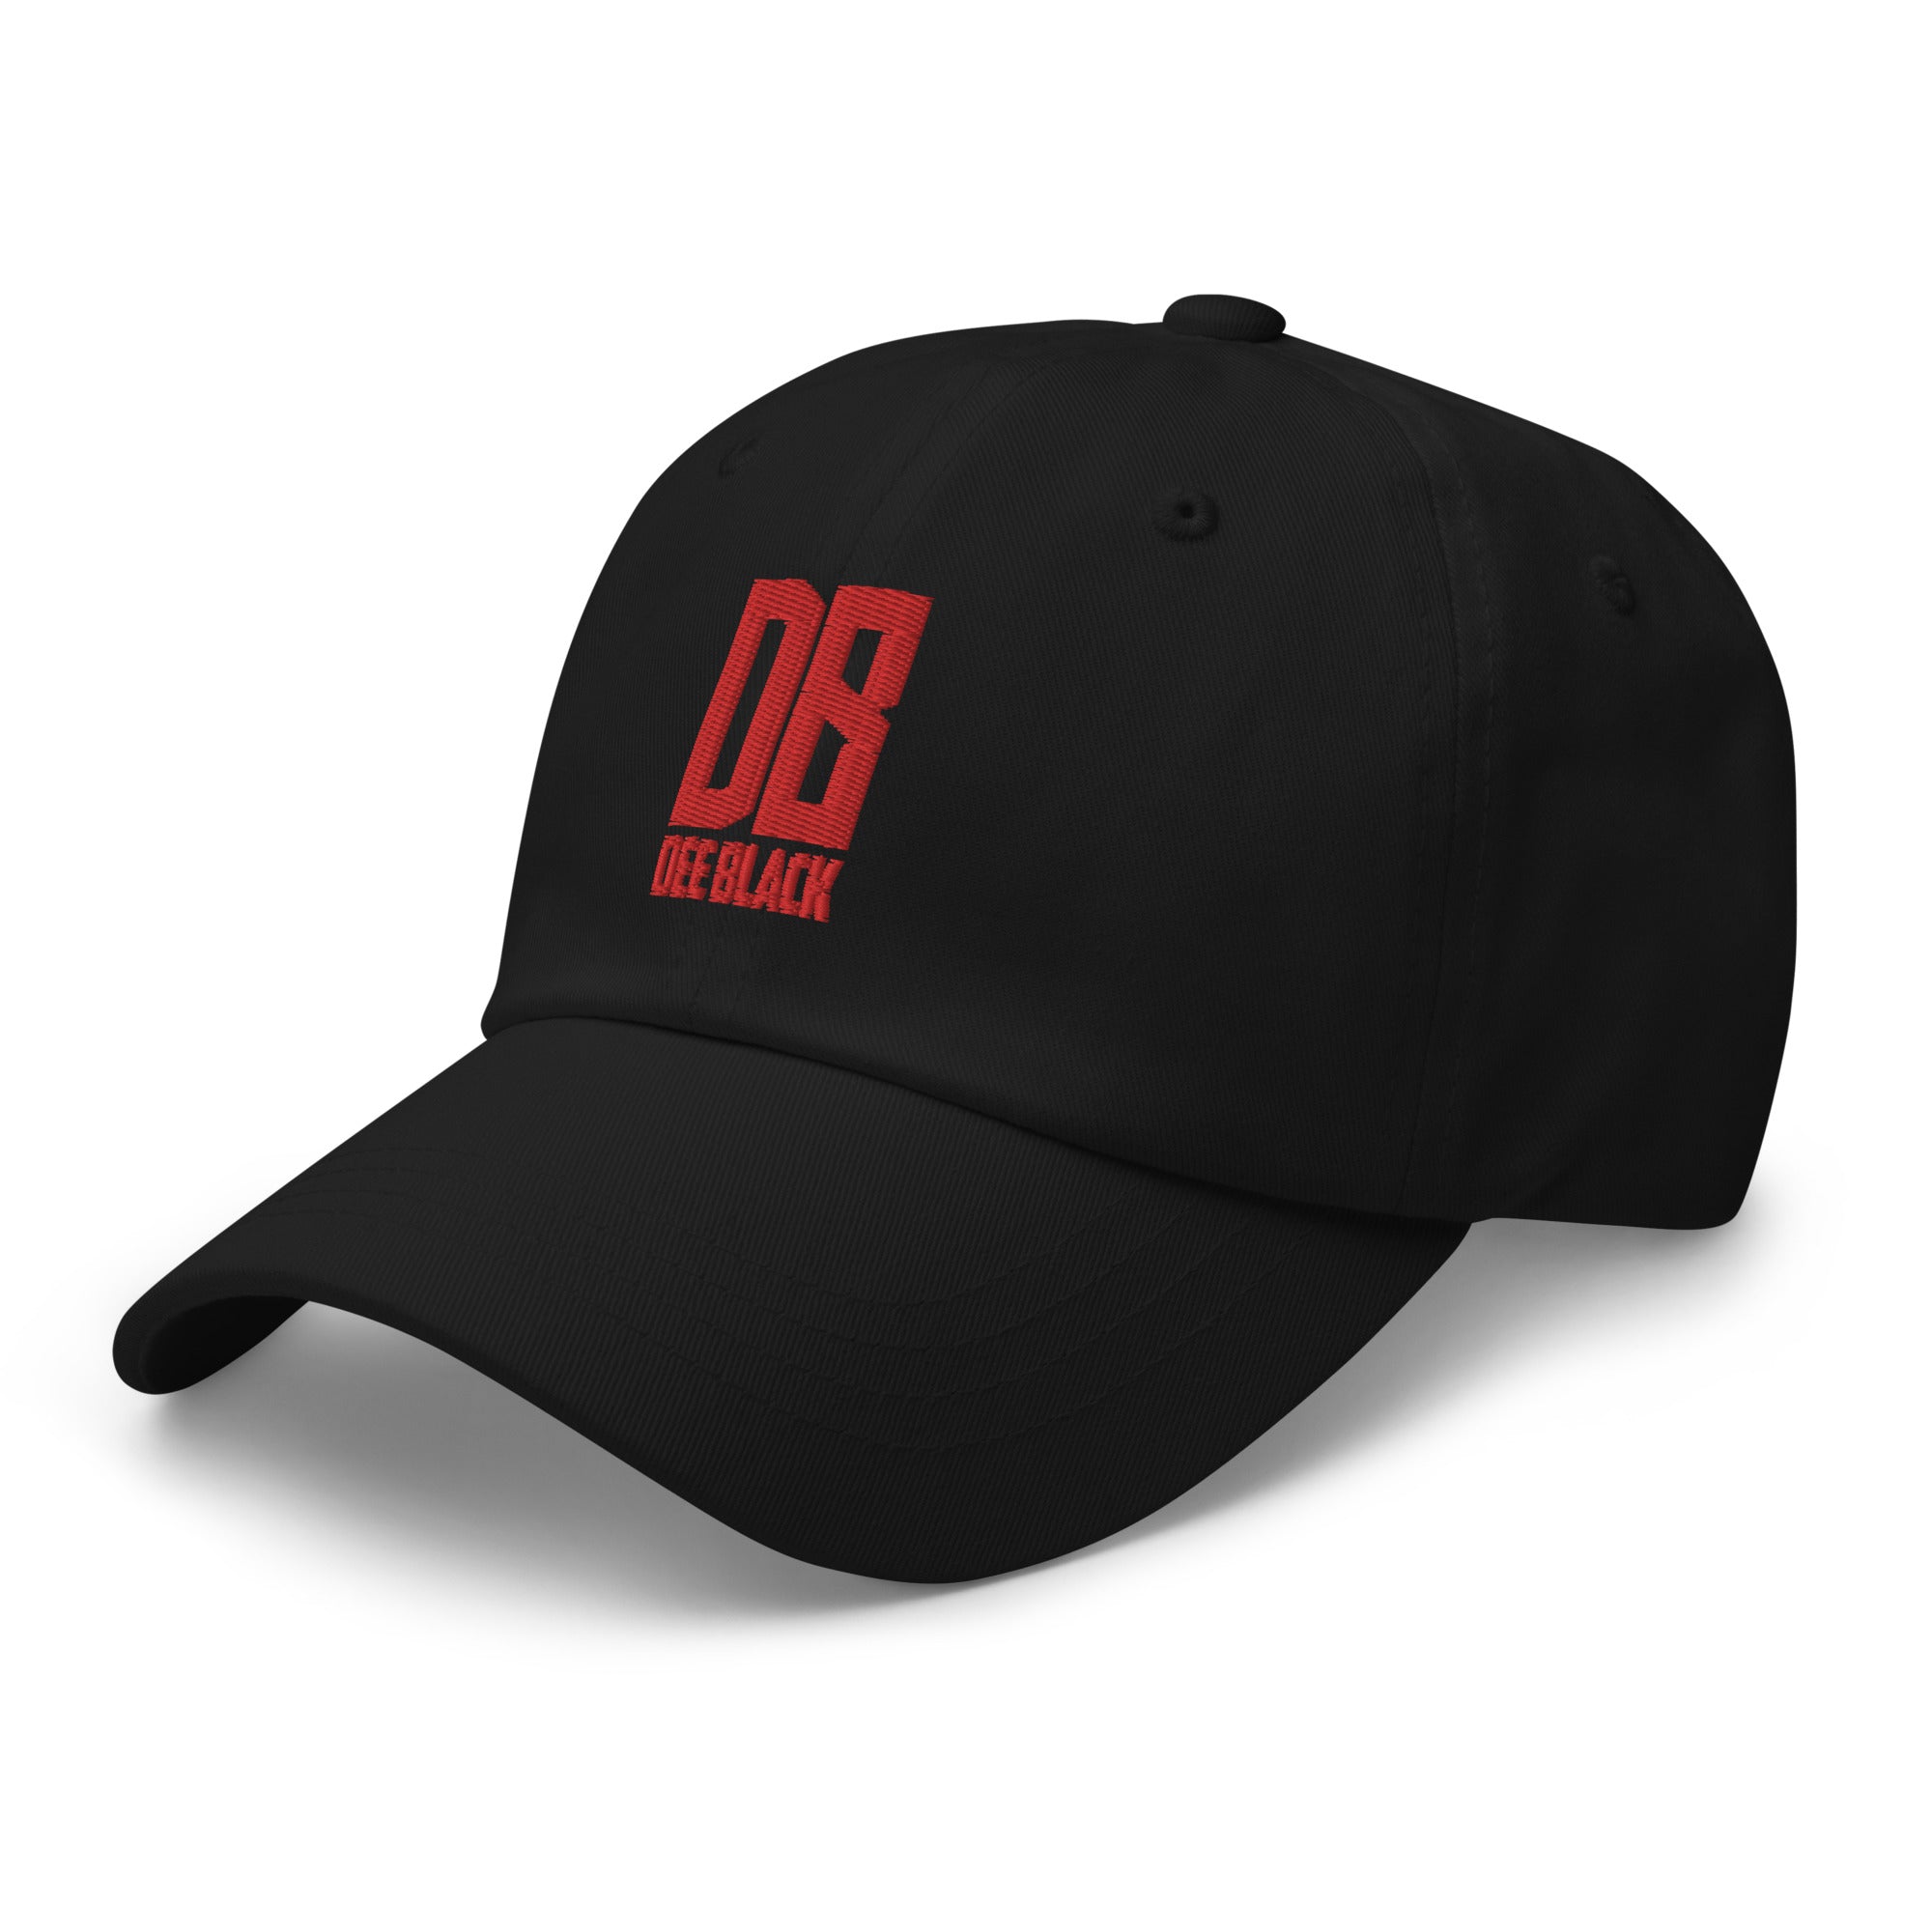 Dee Black - Dad hat